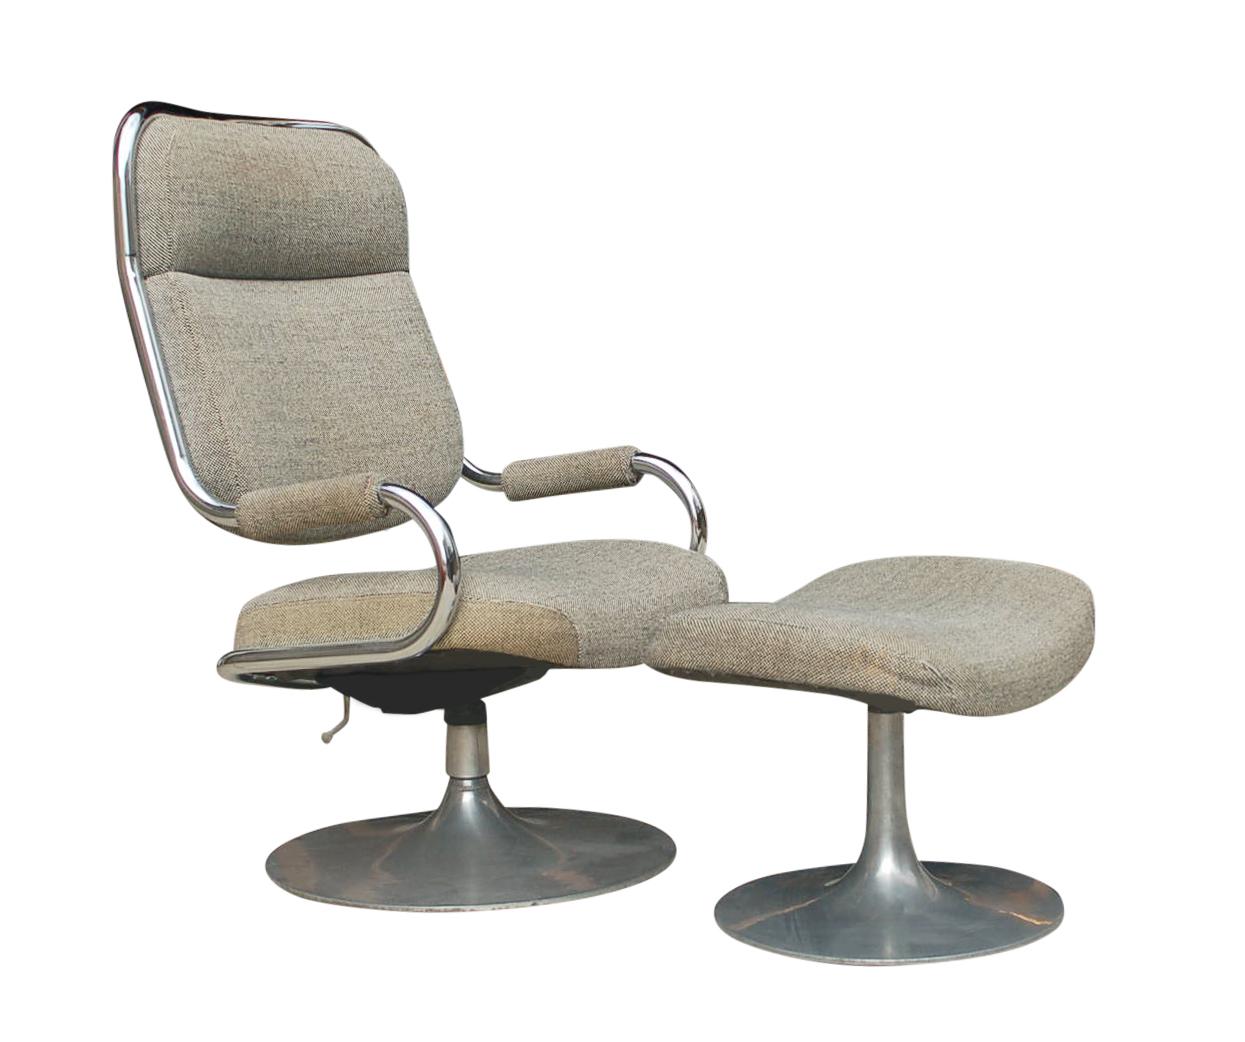 American Mid-Century Modern Chrome Tubular Swivel Lounge Chair with Foot Stool